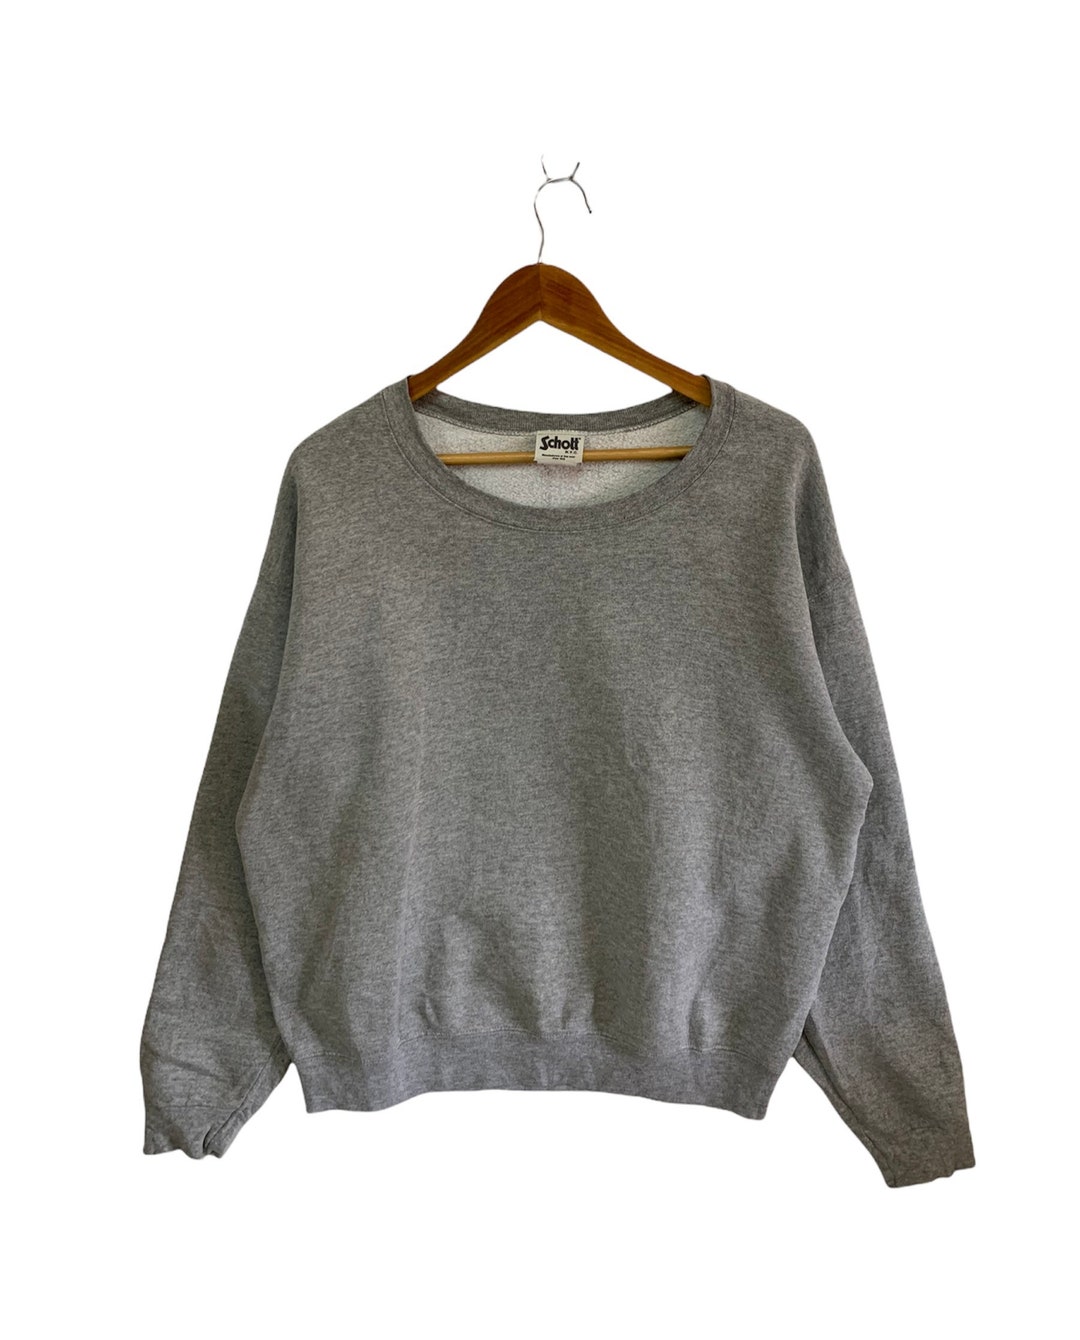 Vintage 90s Plain Schott Sweatshirt Grey Large Size Made in - Etsy